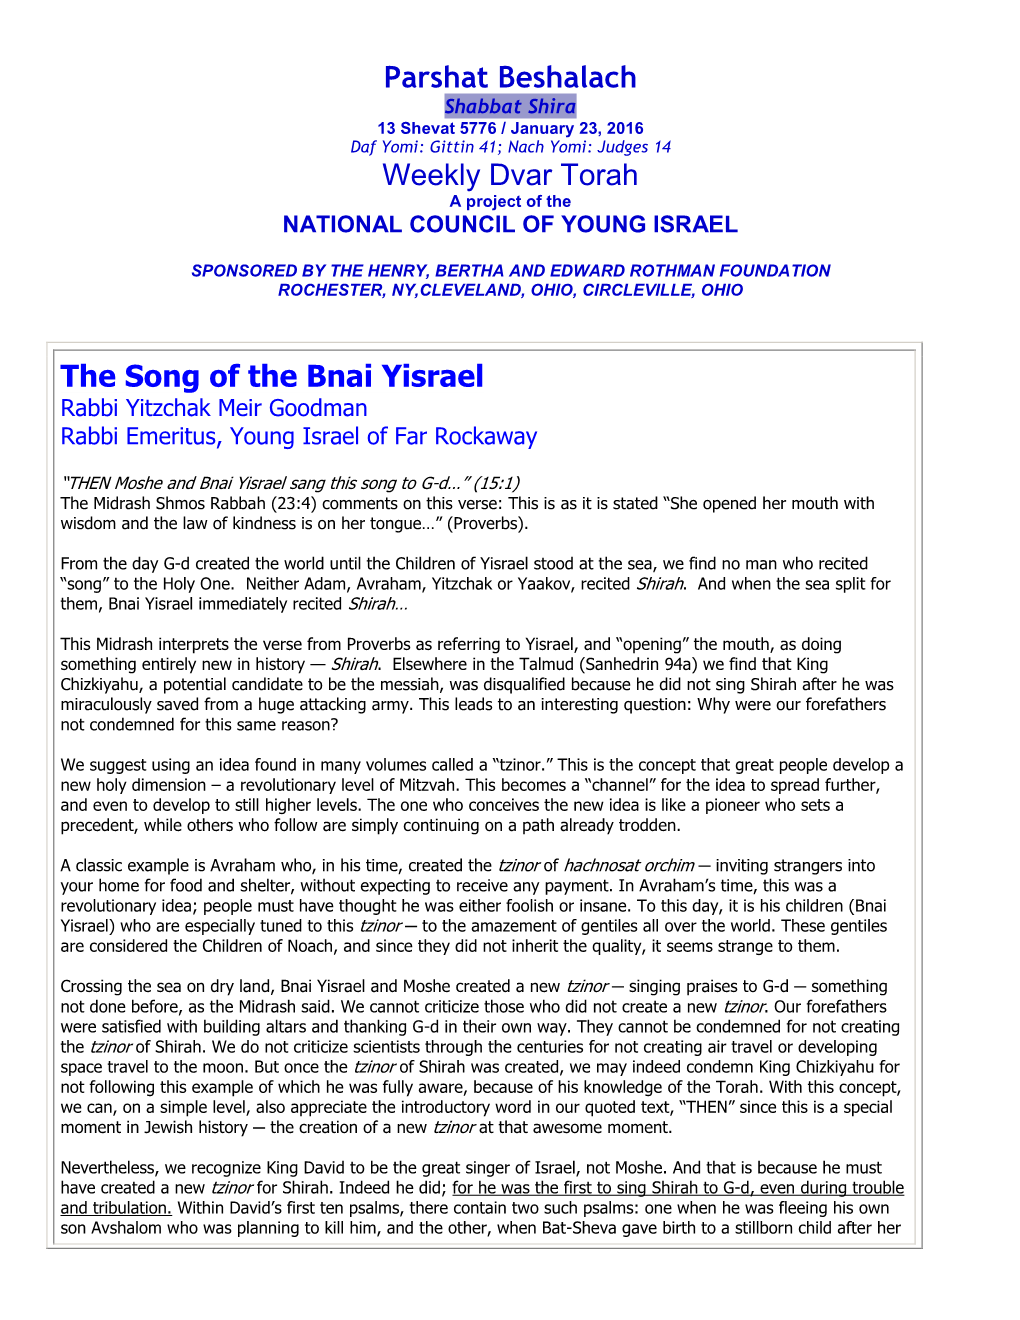 Parshat Beshalach Weekly Dvar Torah the Song of the Bnai Yisrael